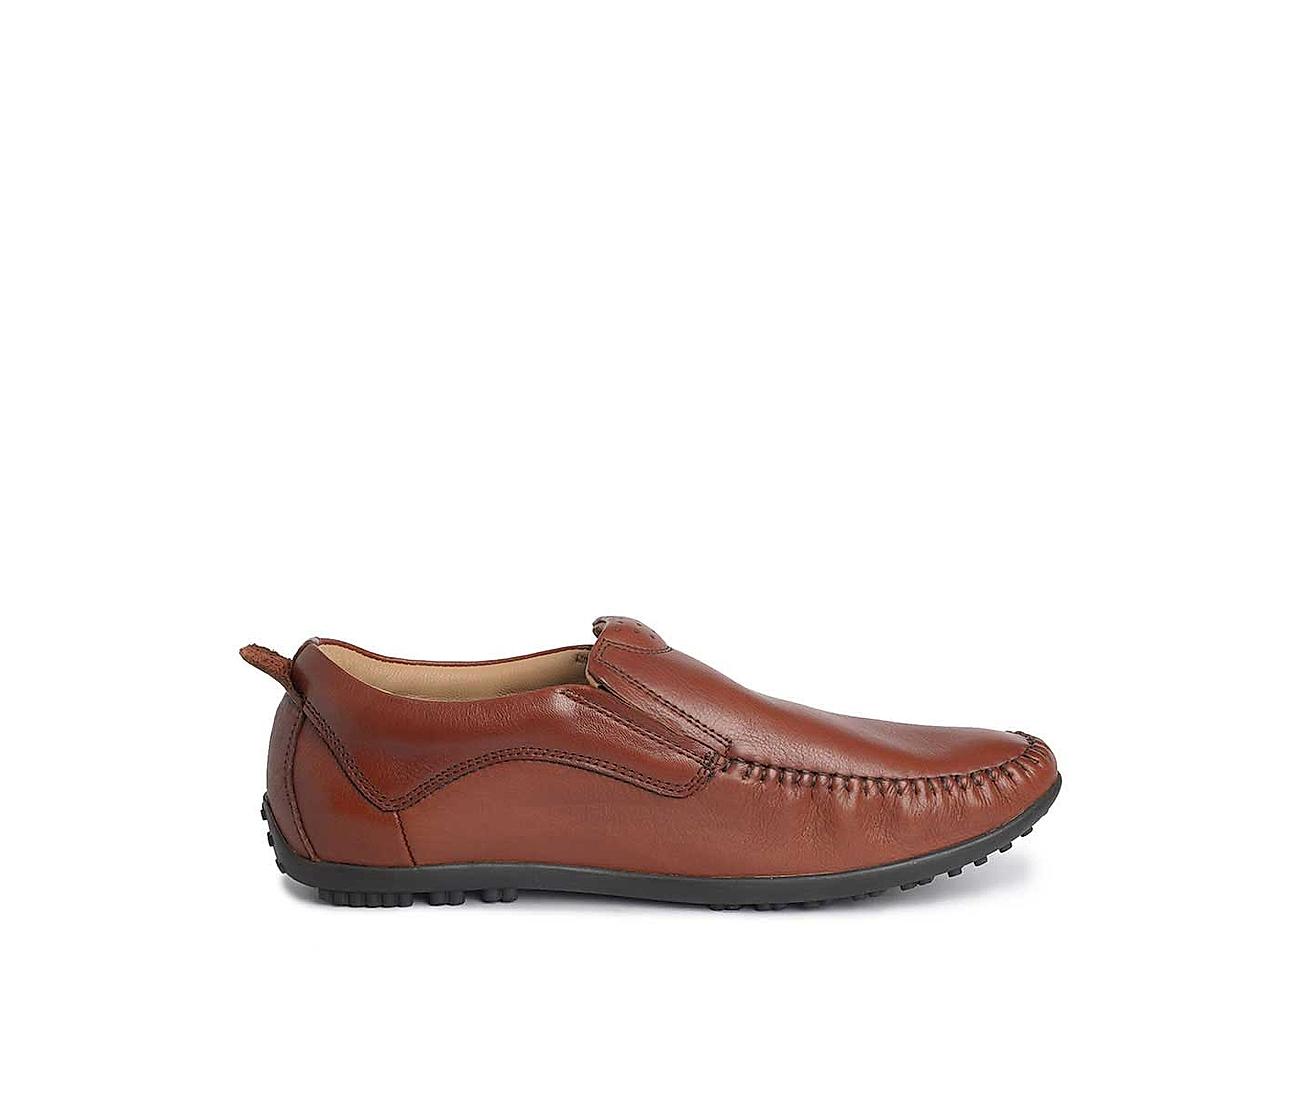 Buy Buckaroo Newton Tan Shoes Online at Regal Shoes |7537334